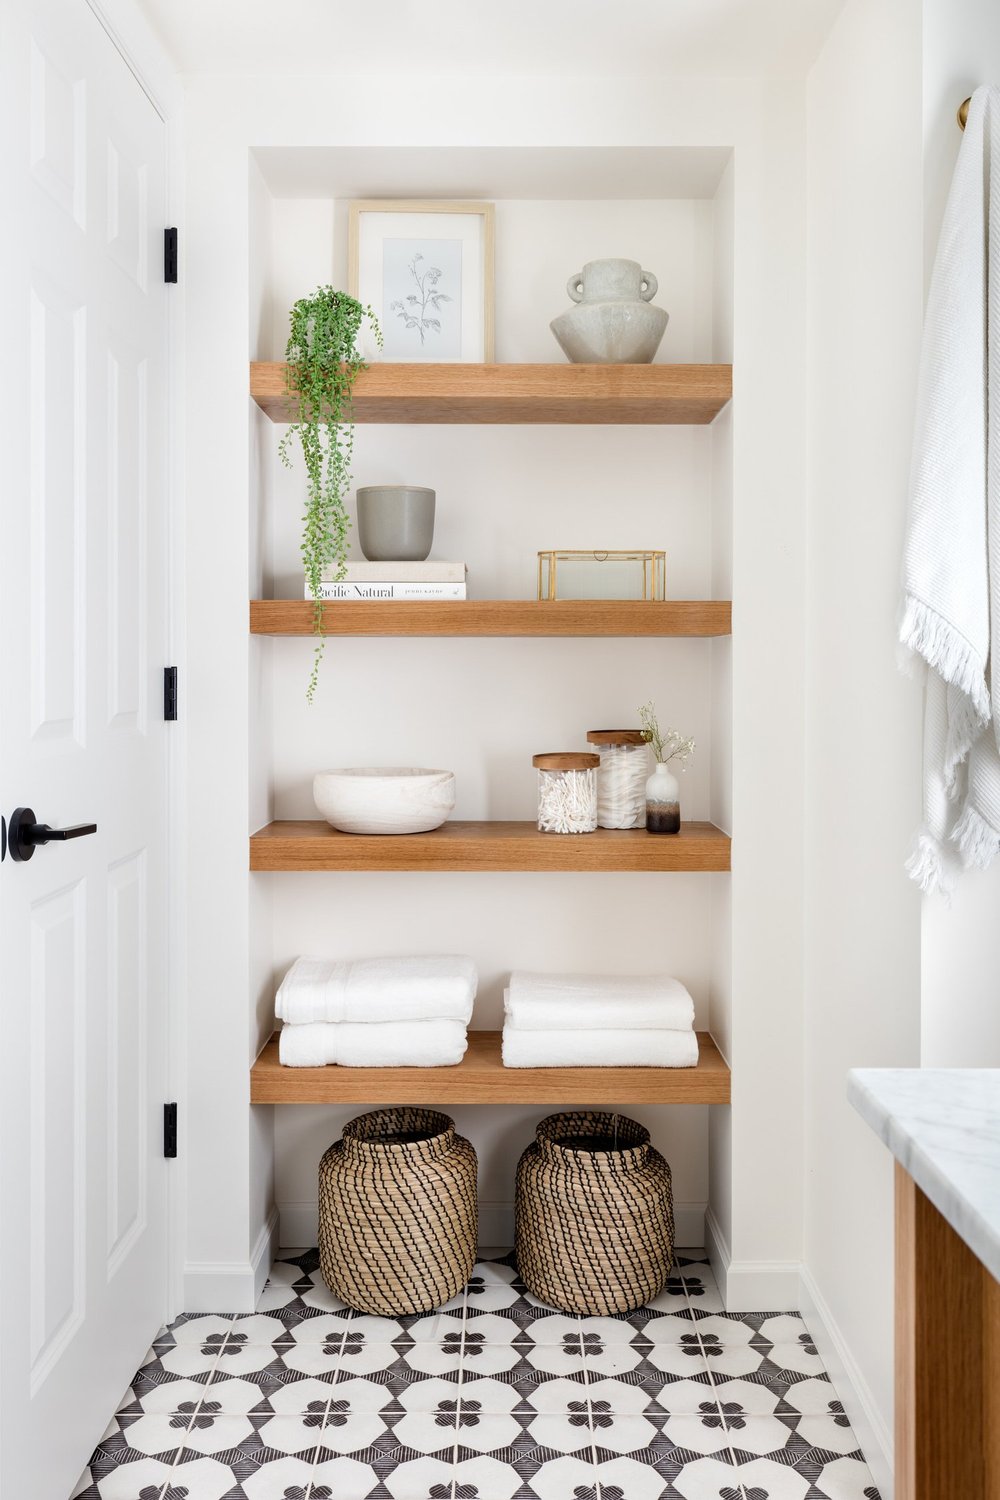 styling-your-shelves-to-perfection-bathroom-kimberlee+marie.jpeg